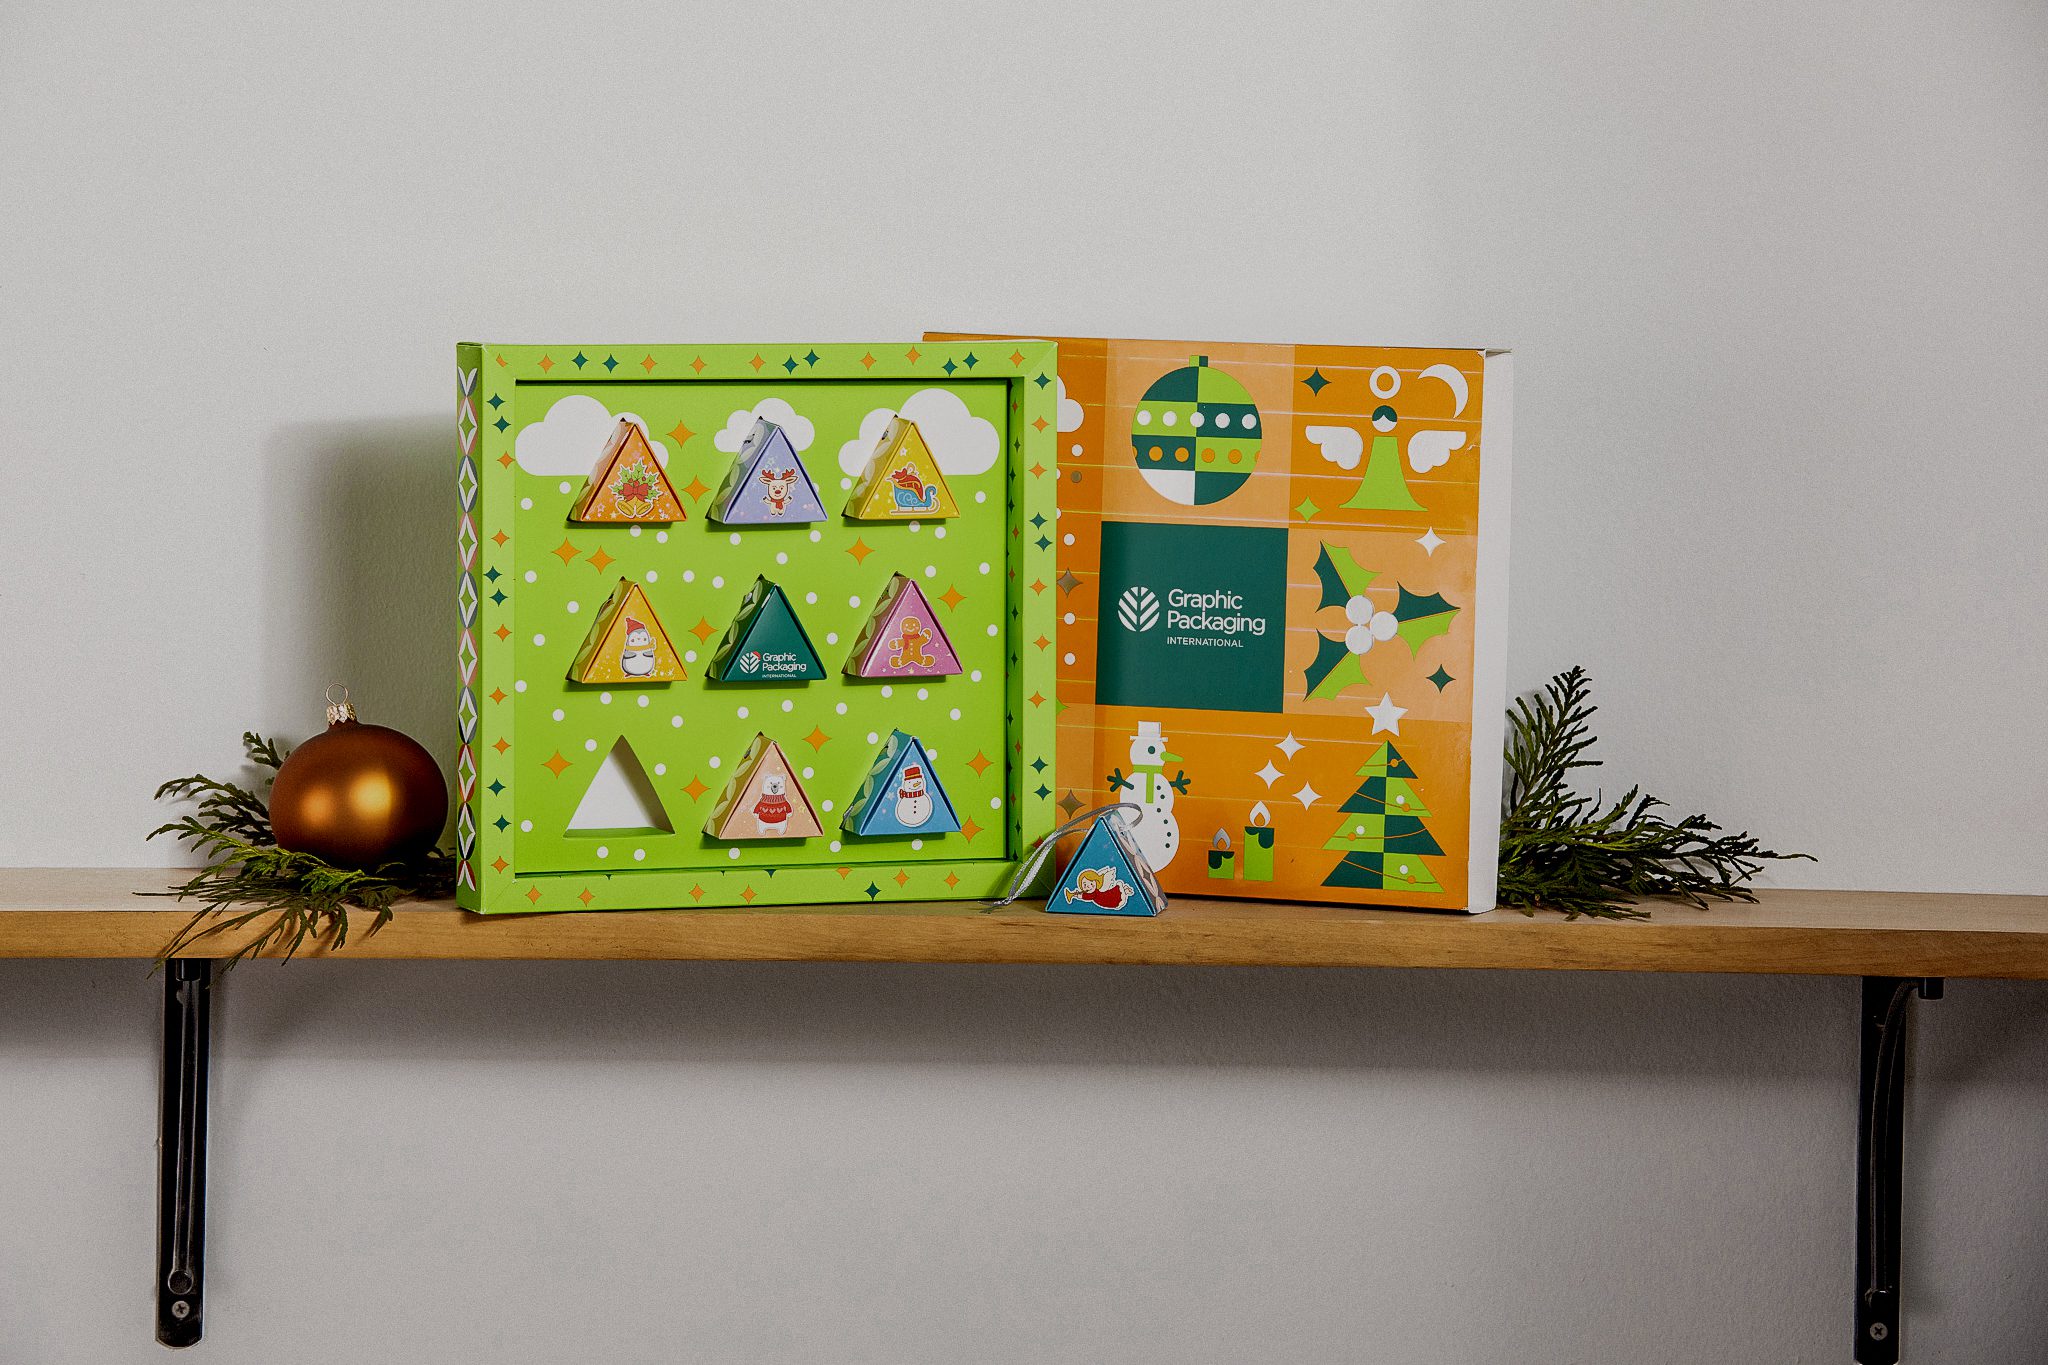 A view of Graphic Packaging International's seasonal calendar